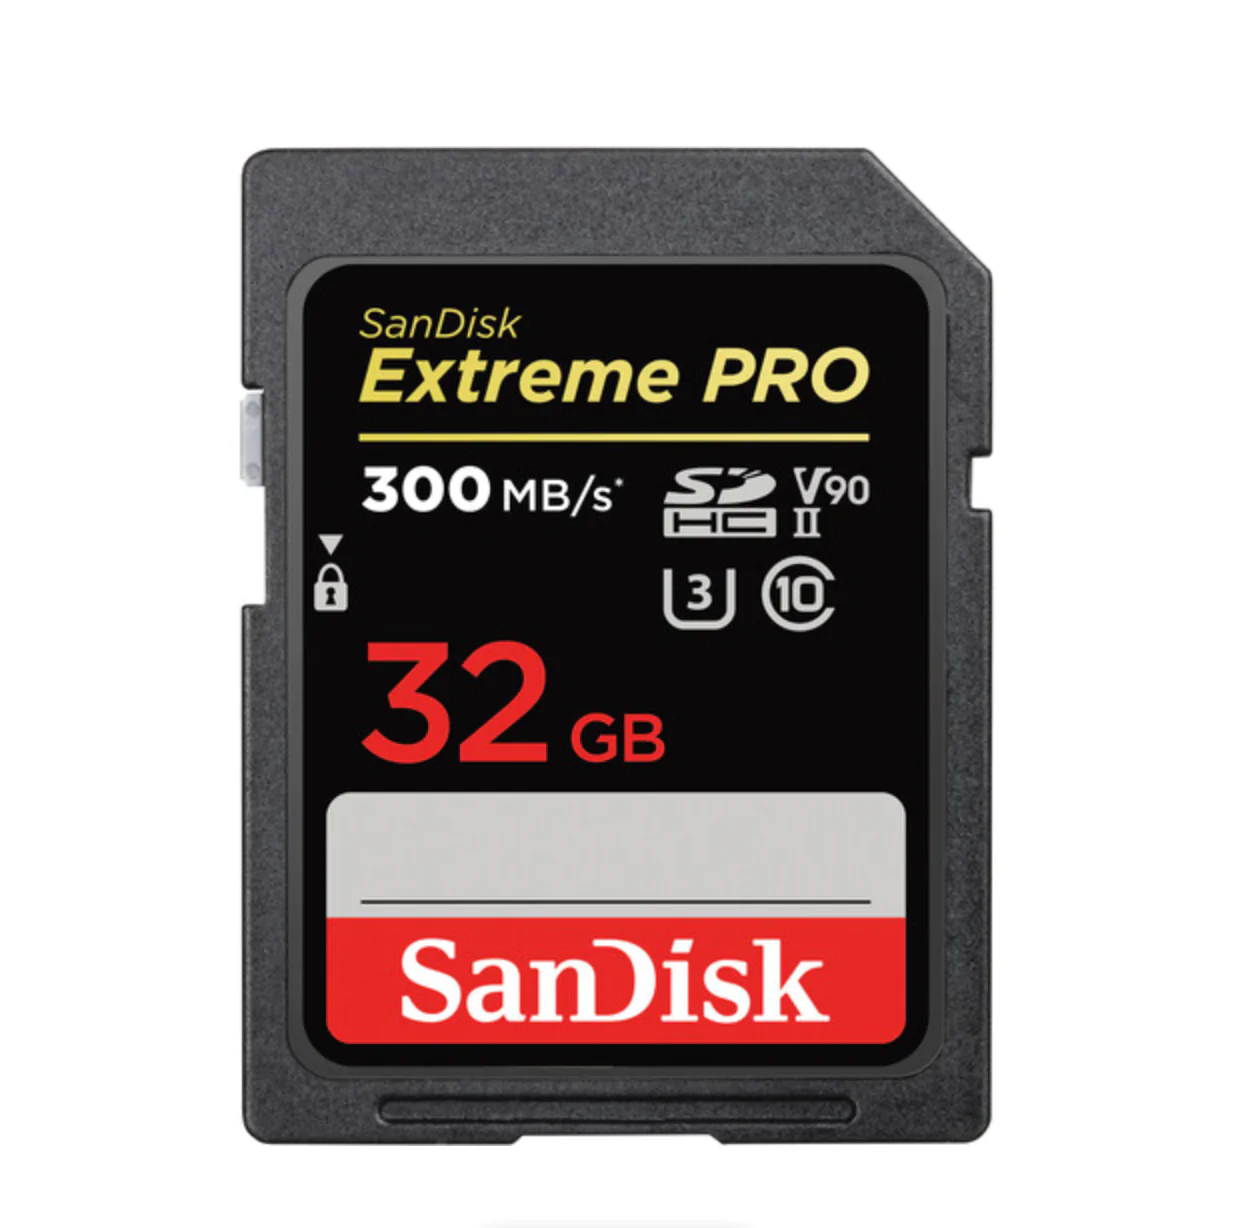 SanDisk 32GB Extreme PRO UHS-II SDHC Memory Card V90 Sandisk SD Card